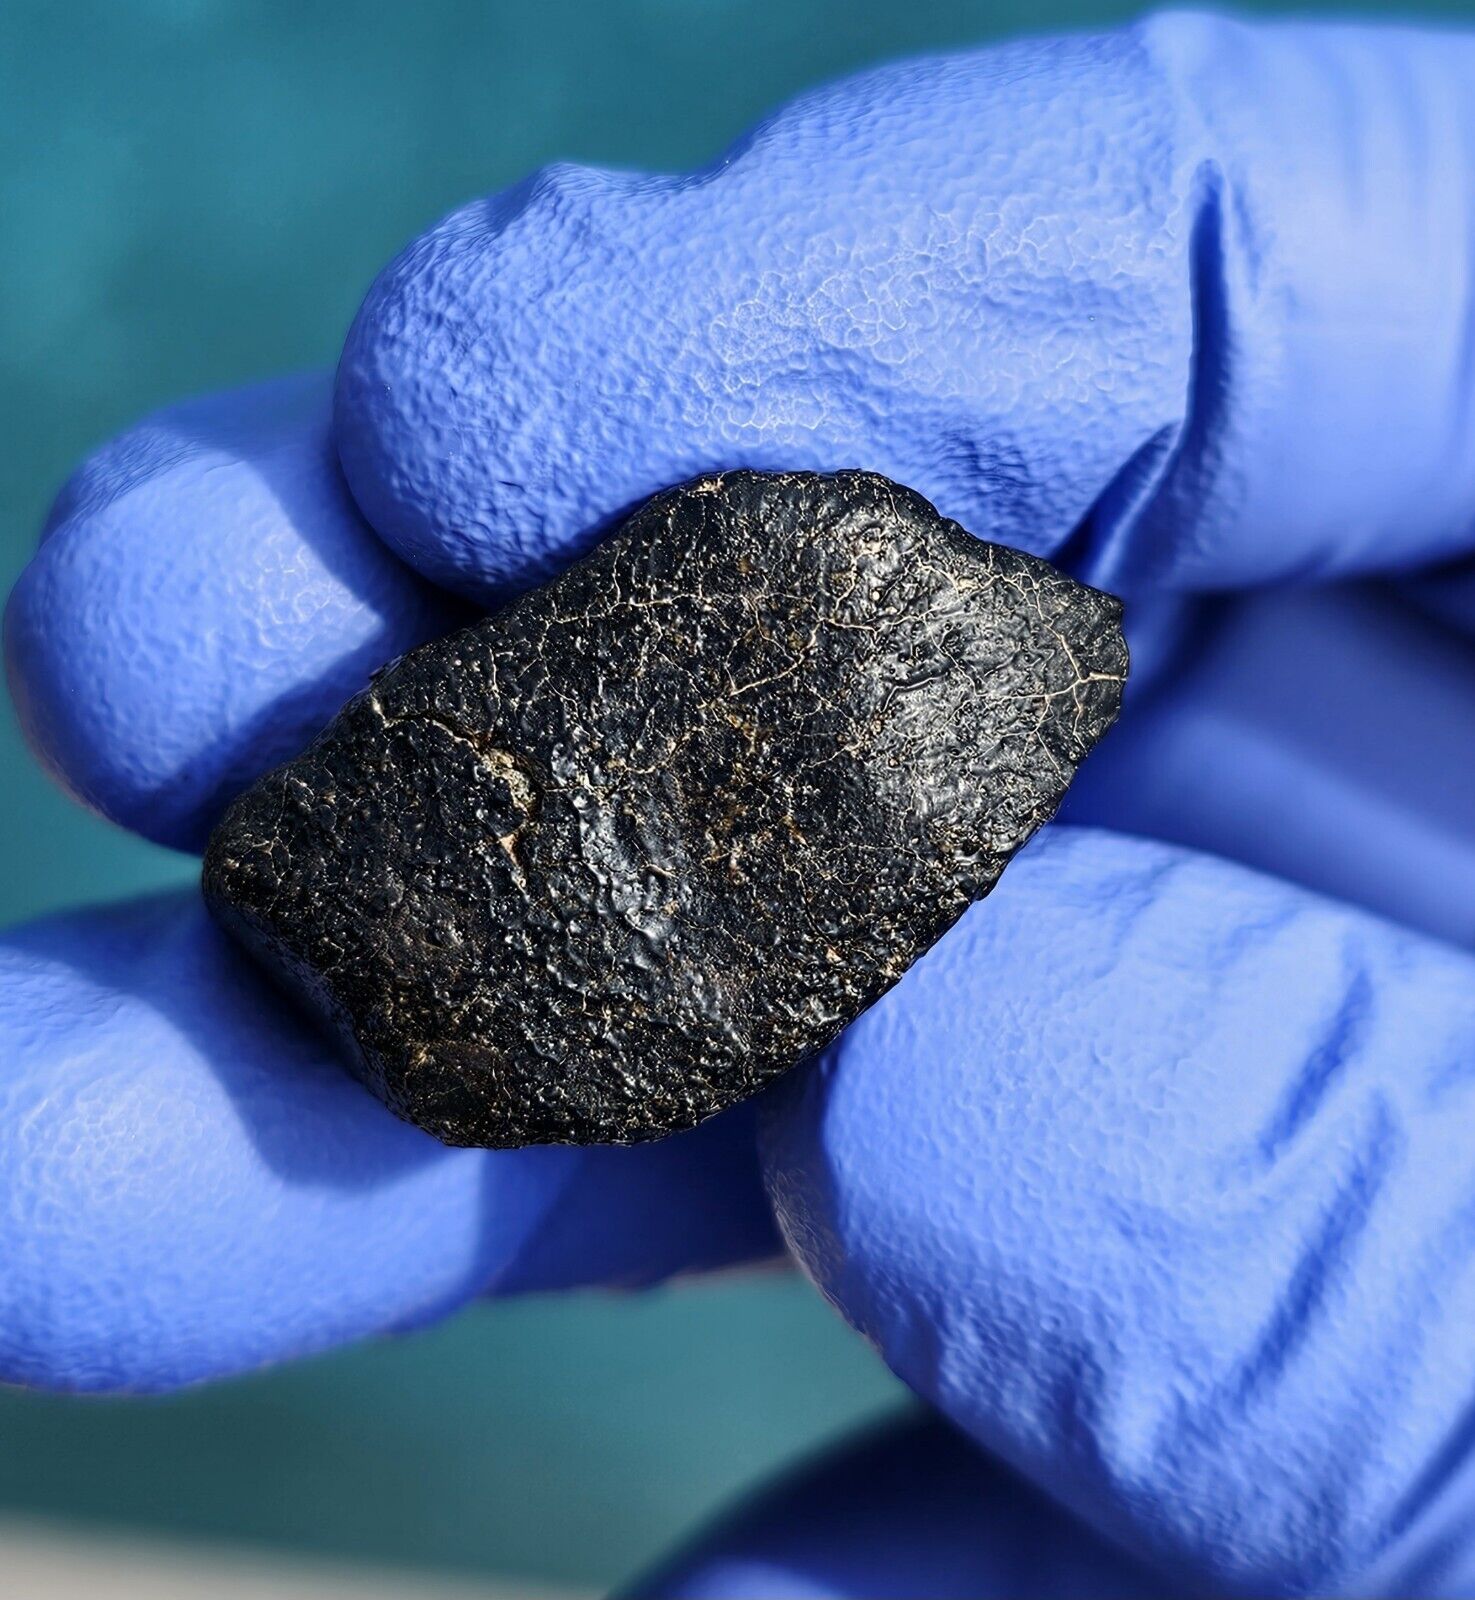 Meteorite**Hassi Messauod 001, Nakhlite Martian**11.507 grams, W/Fusion Crust